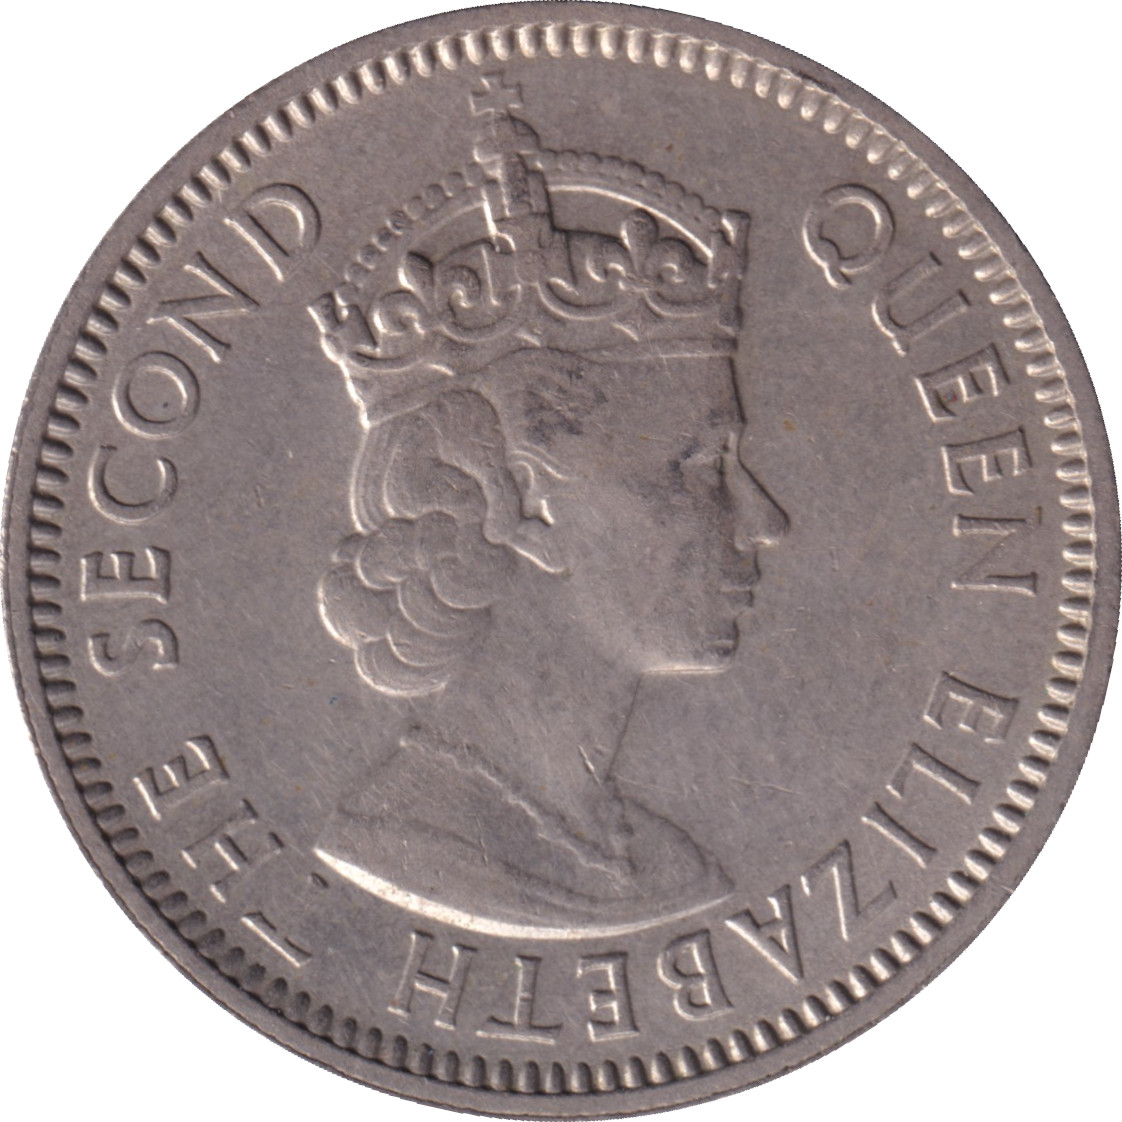 25 cents - Elizabeth II